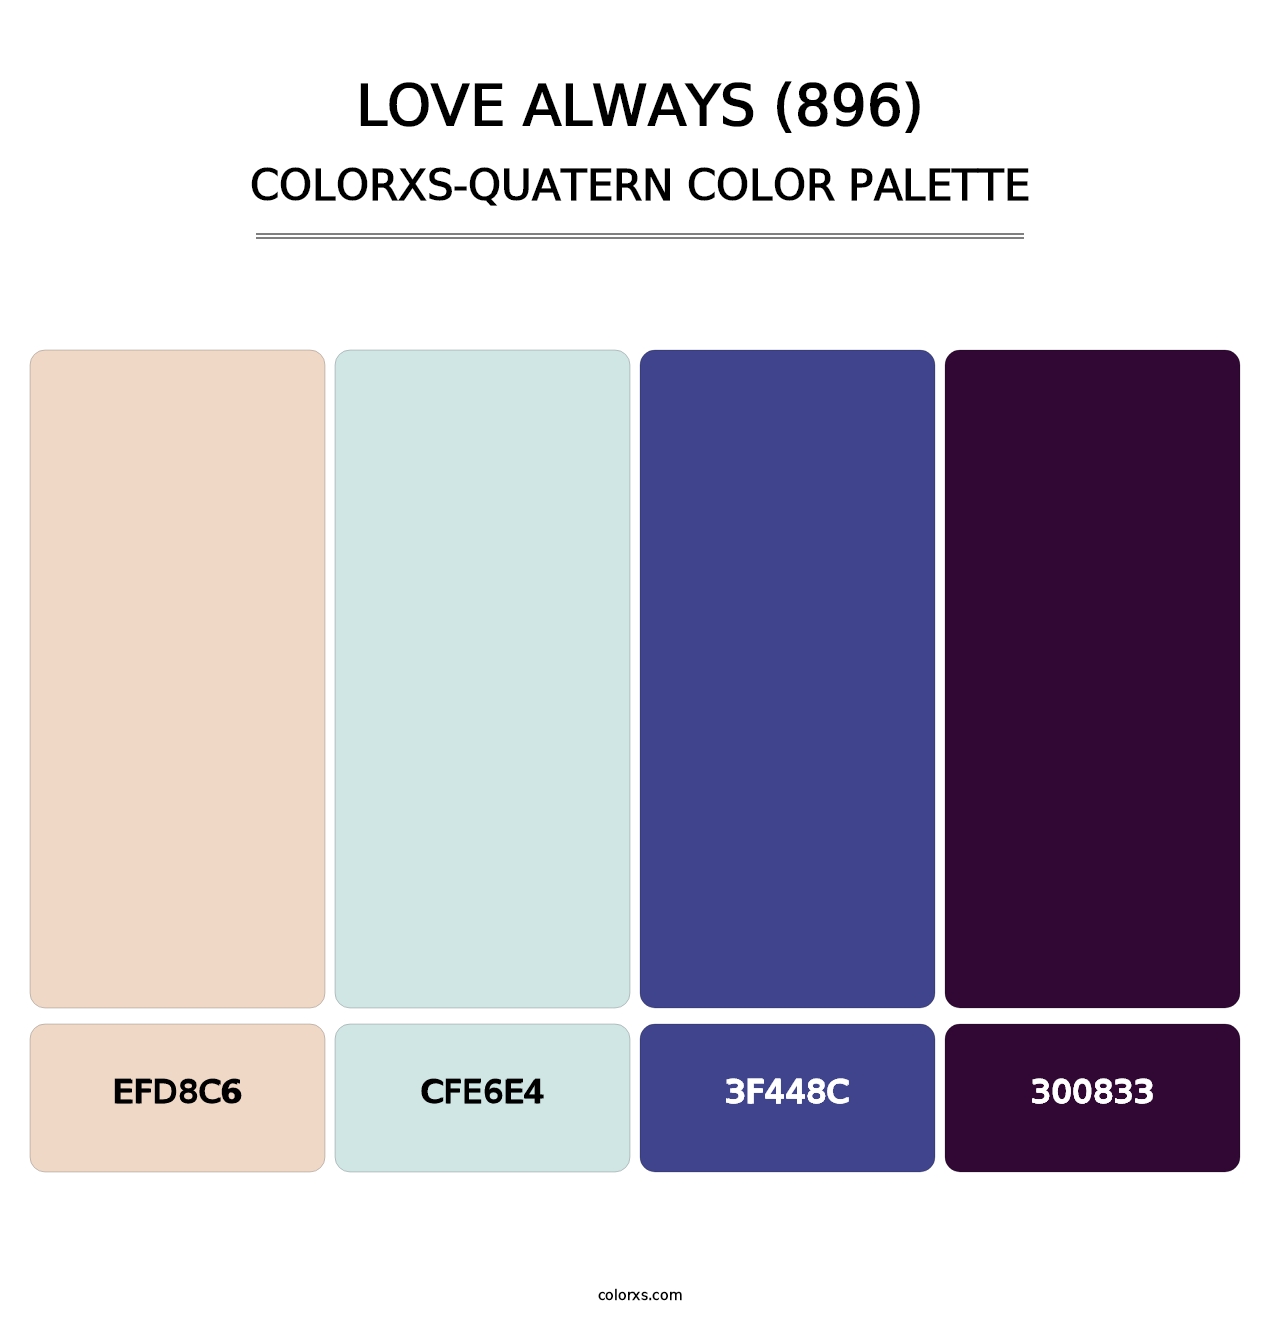 Love Always (896) - Colorxs Quatern Palette